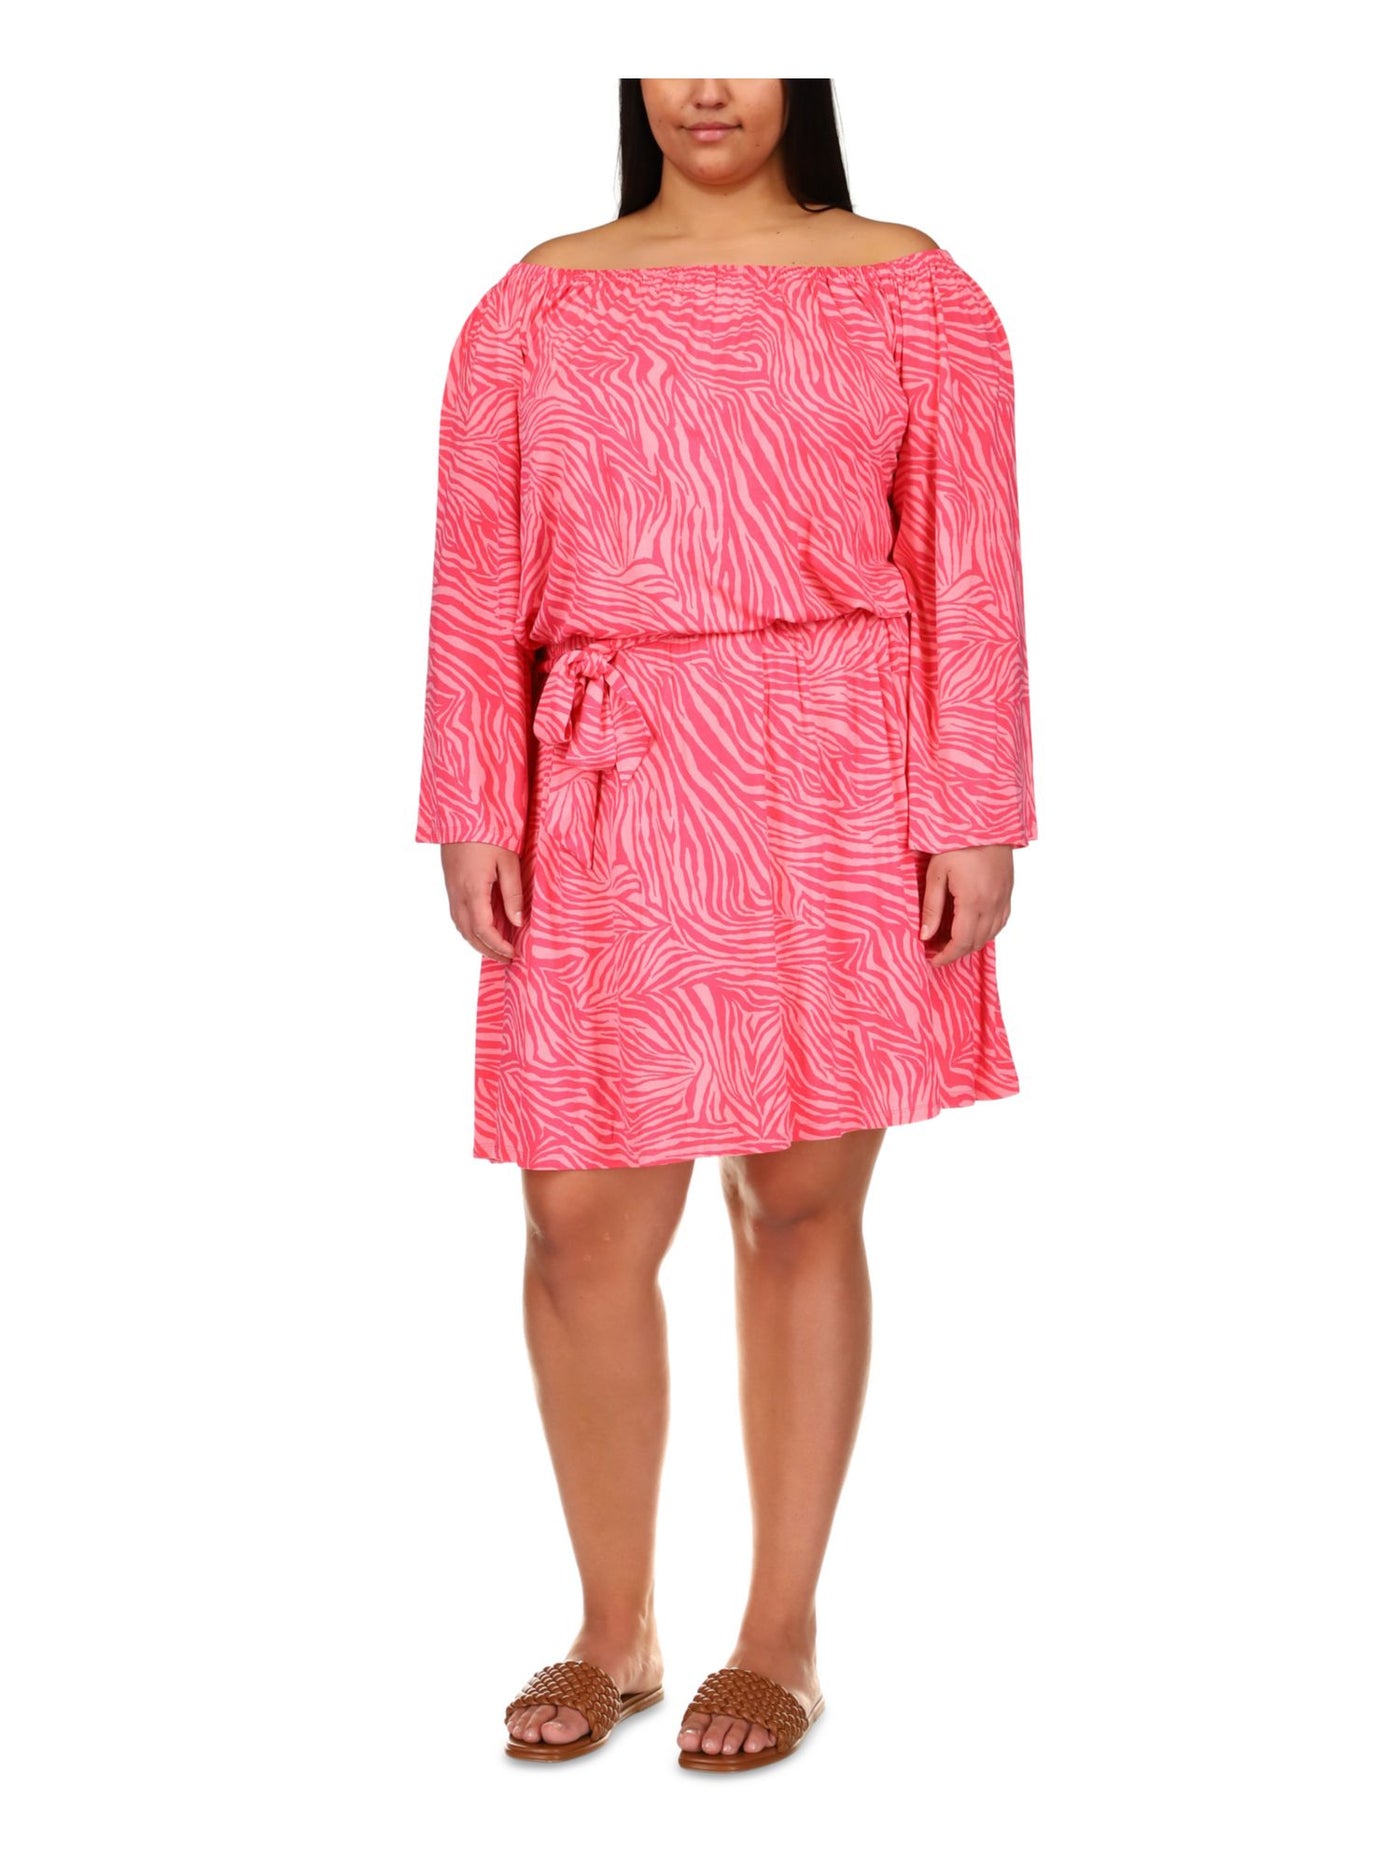 MICHAEL MICHAEL KORS Womens Pink Long Sleeve Off Shoulder Above The Knee Shift Dress 1X